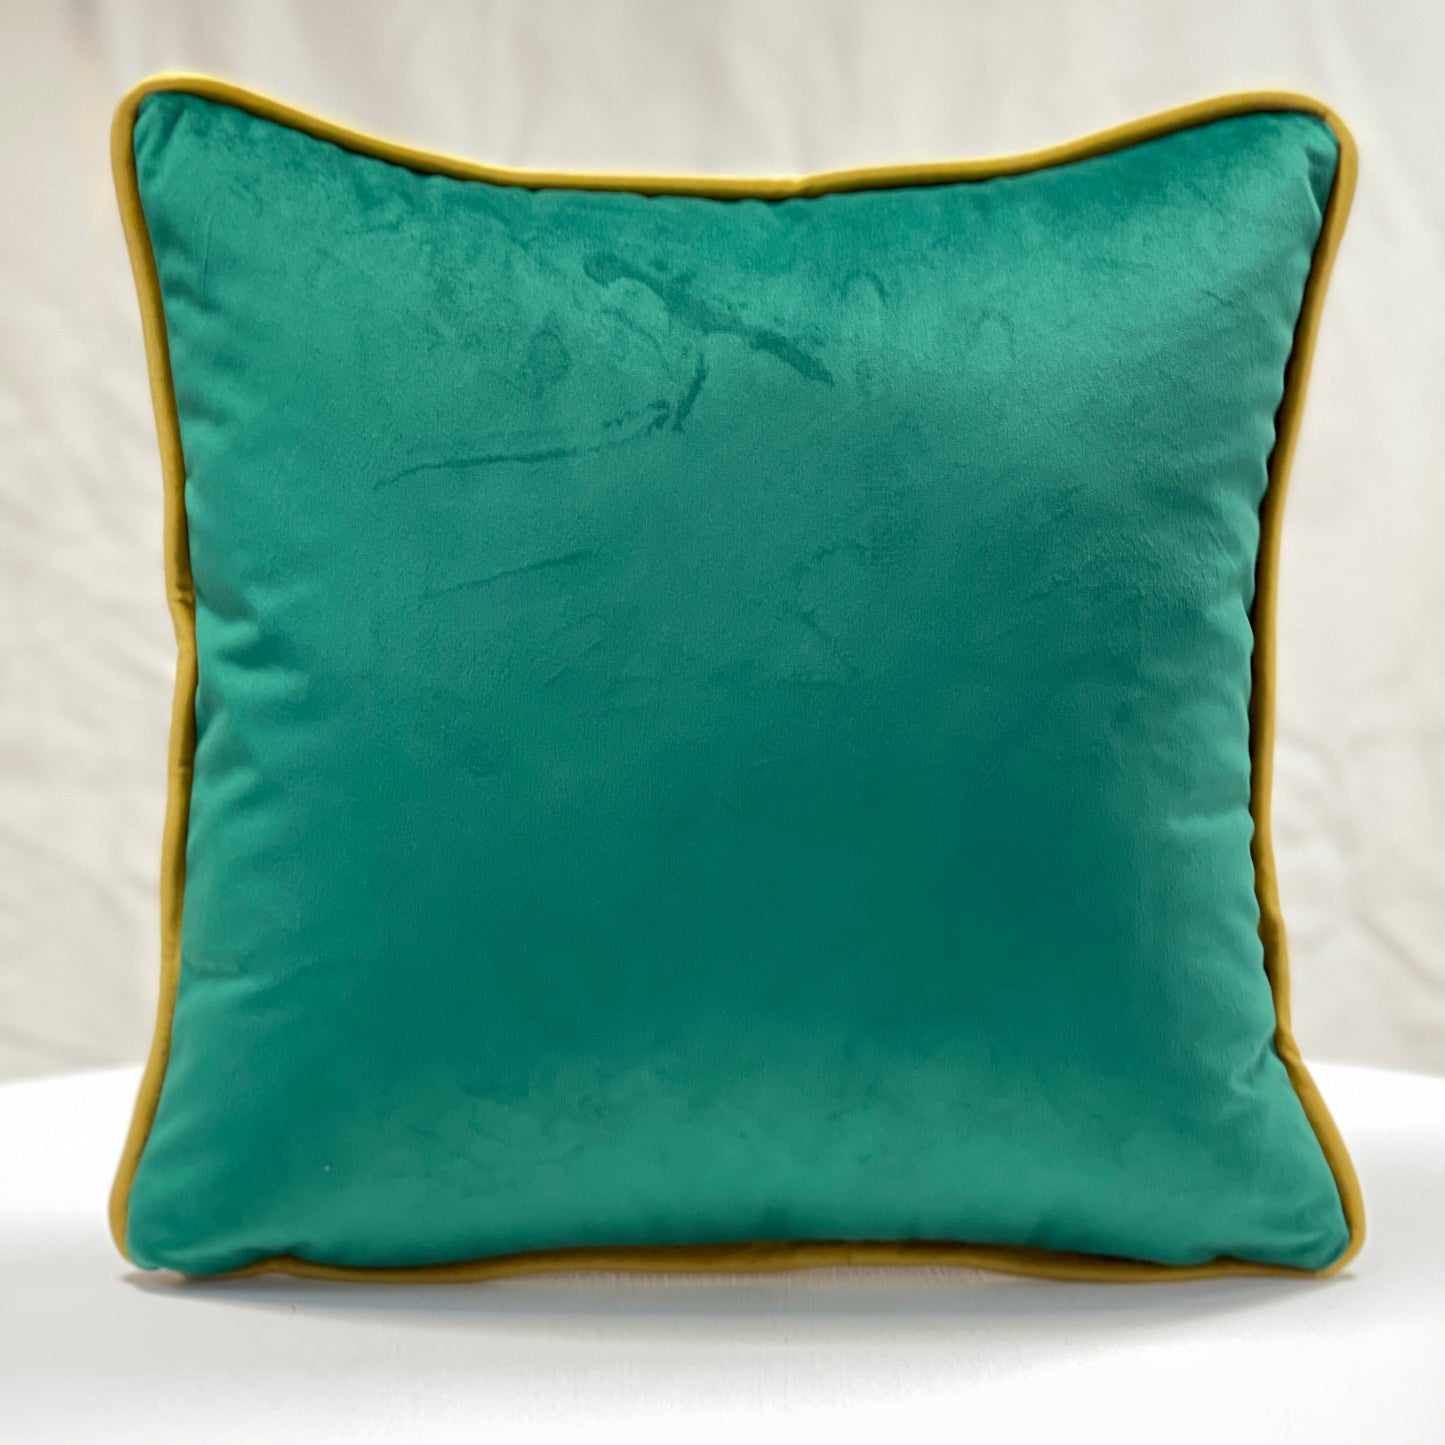 Emerald green velvet piped cushion